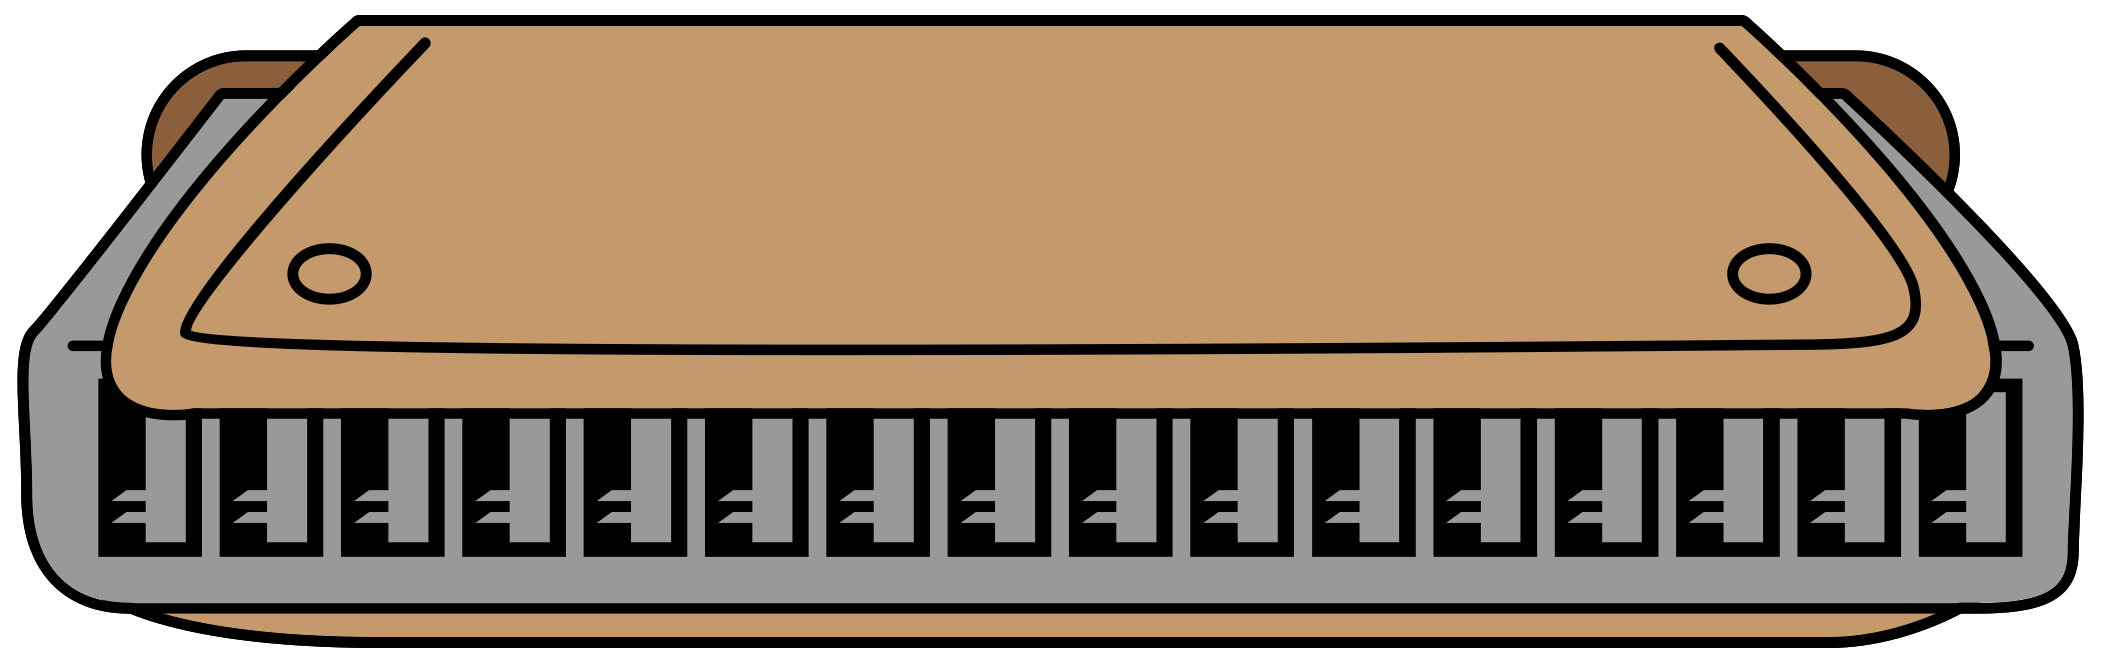 Music instrument harmonica png